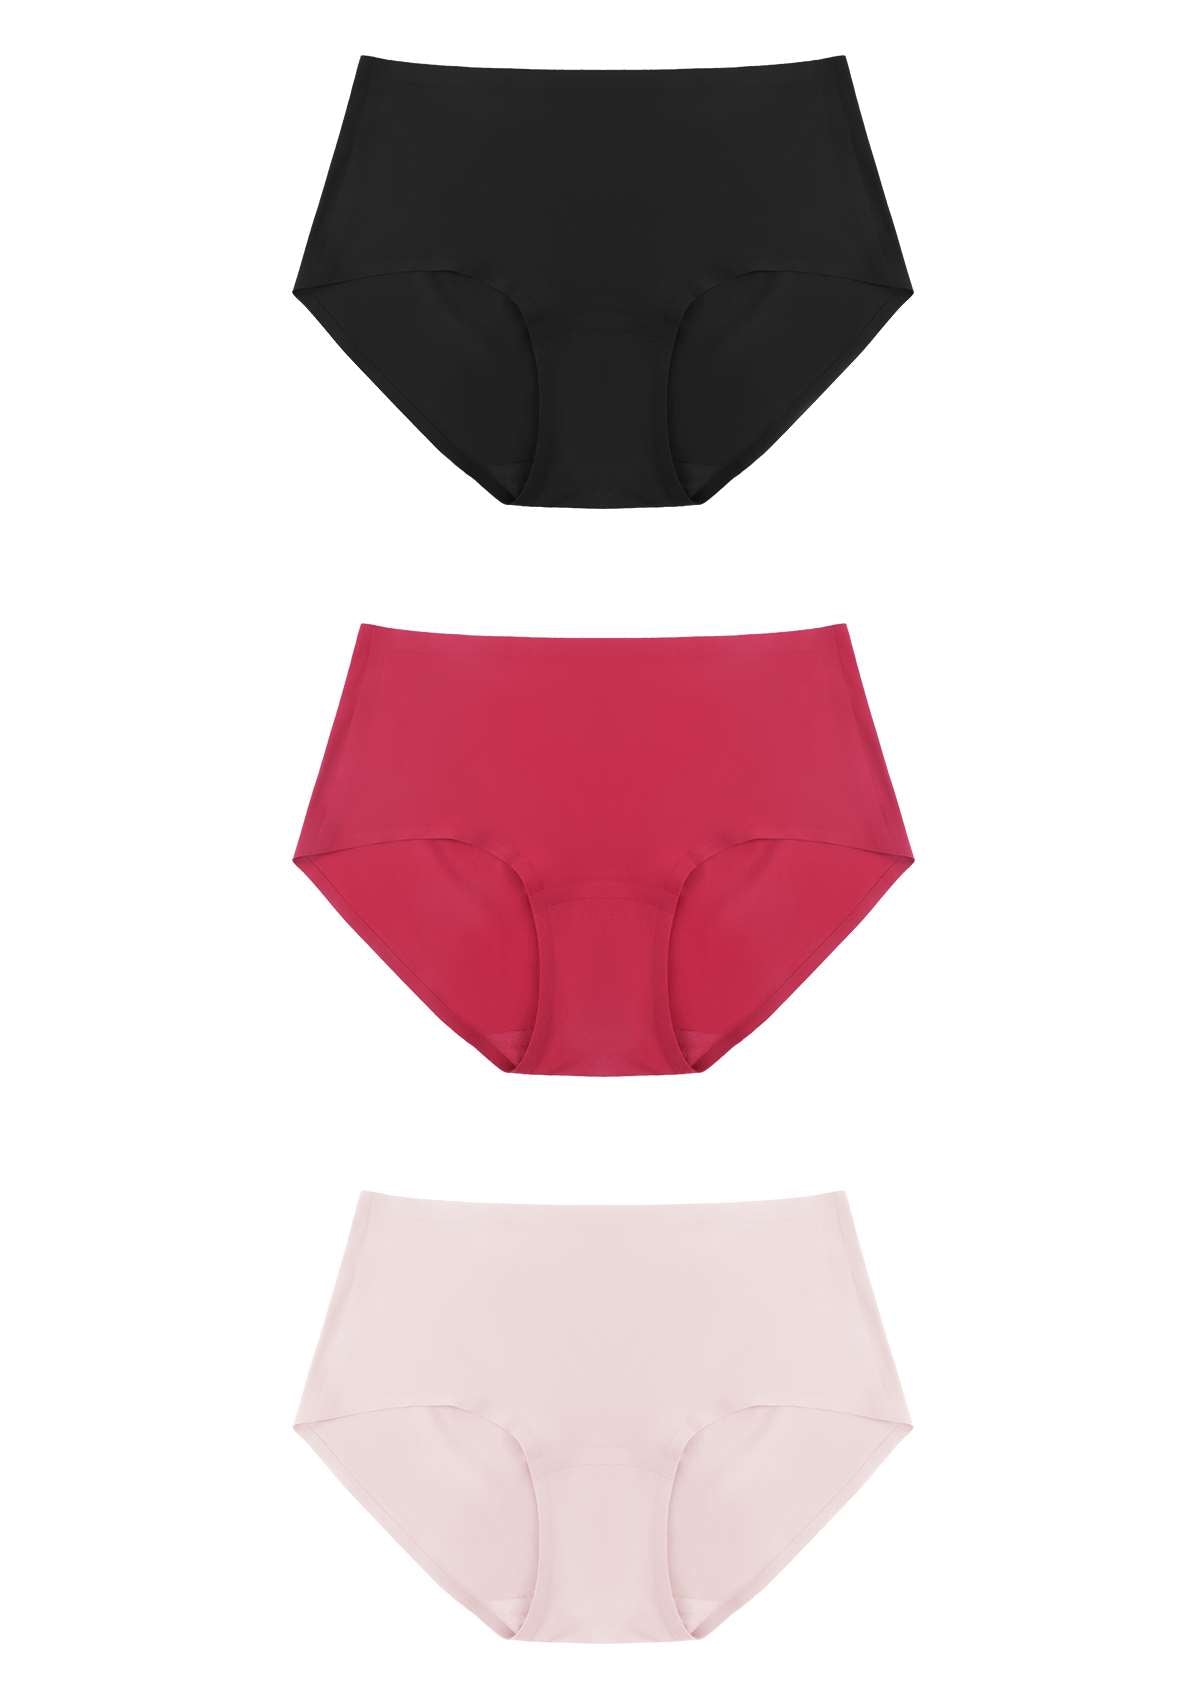 HSIA FlexiFit Soft Stretch Seamless Brief Underwear Bundle - 3 Packs/$15 / XS-L / Black+Red+Dusty Rose